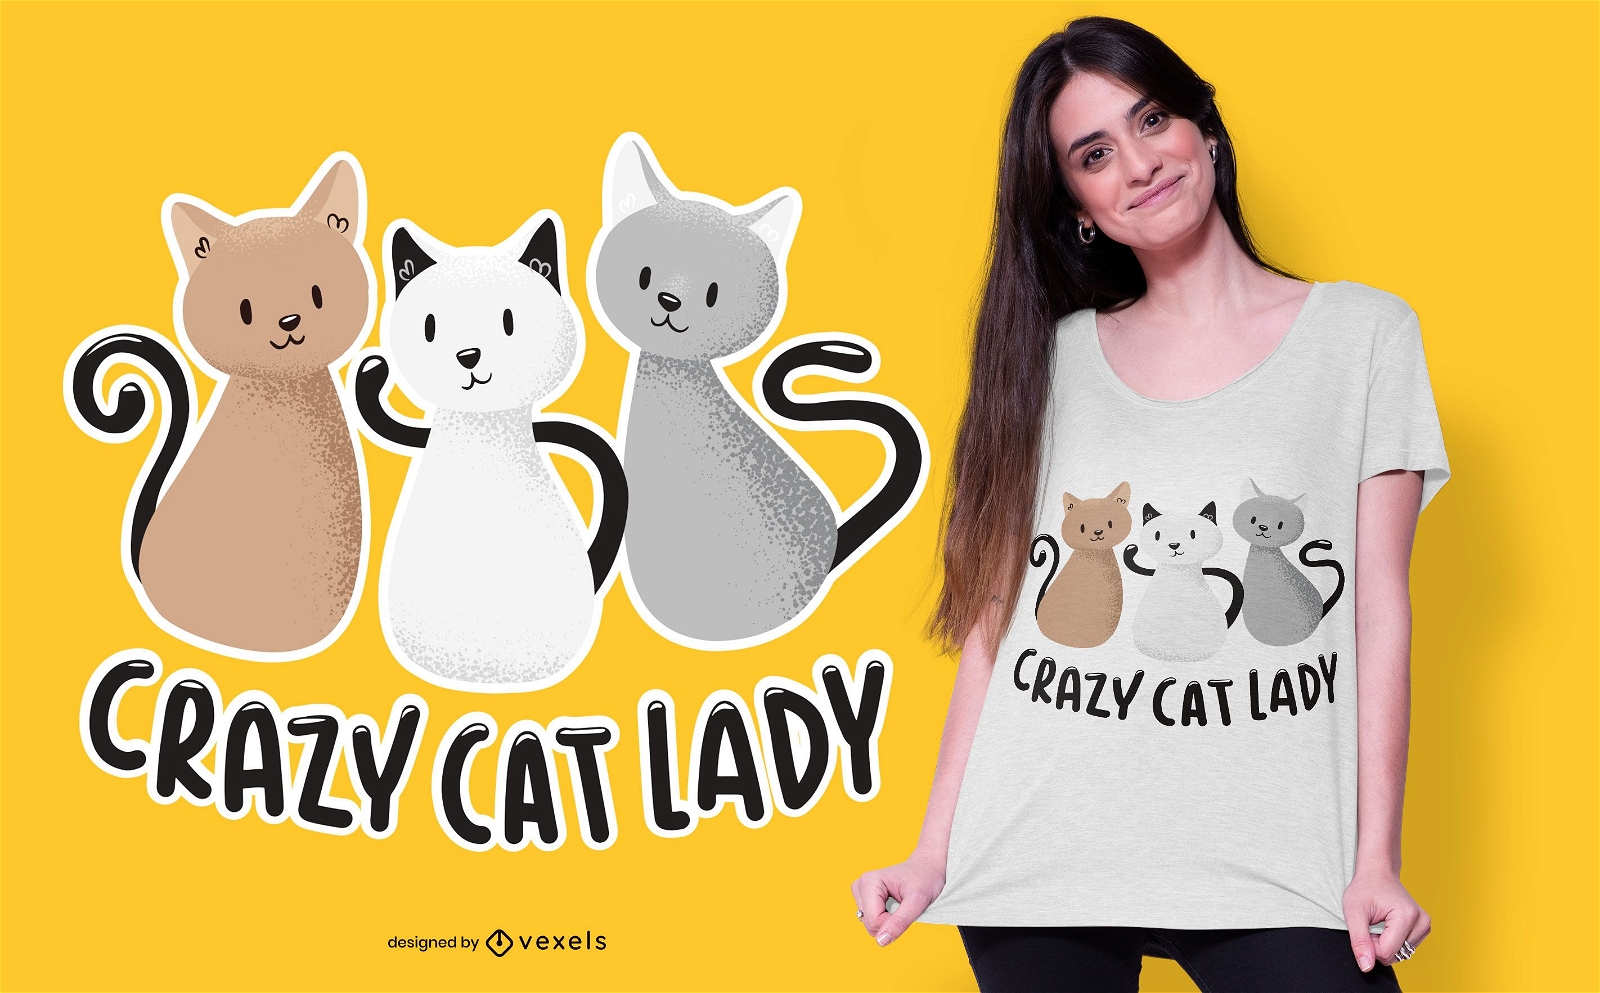 crazy cat lady t-shirt design